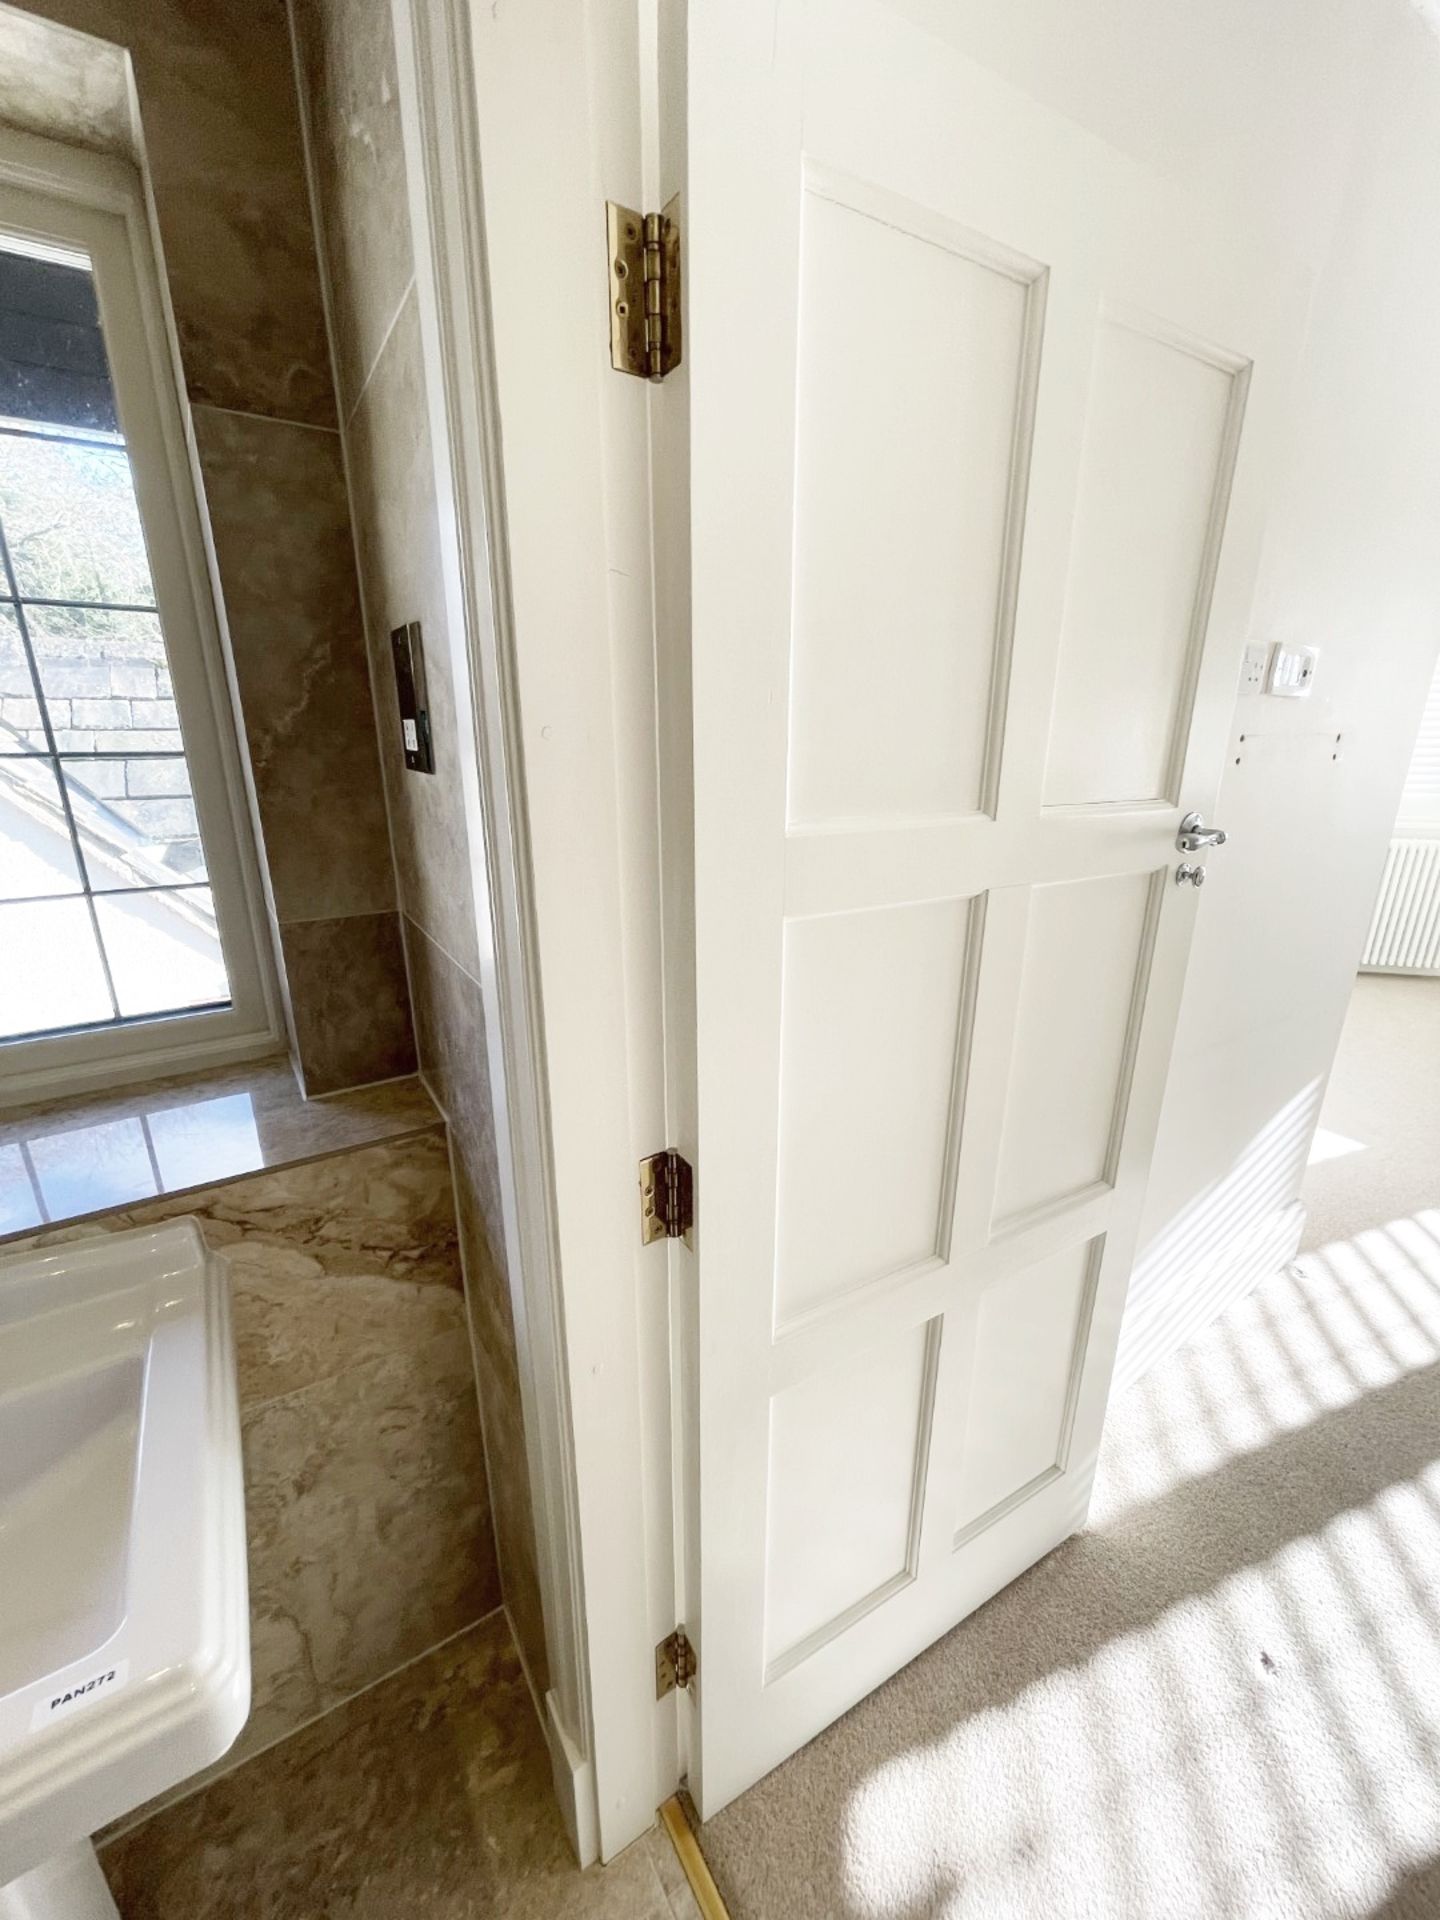 1 x Solid Wood Lockable Painted Internal Bathroom Door in White - Includes Handles and Hinges - Ref: - Image 17 of 17